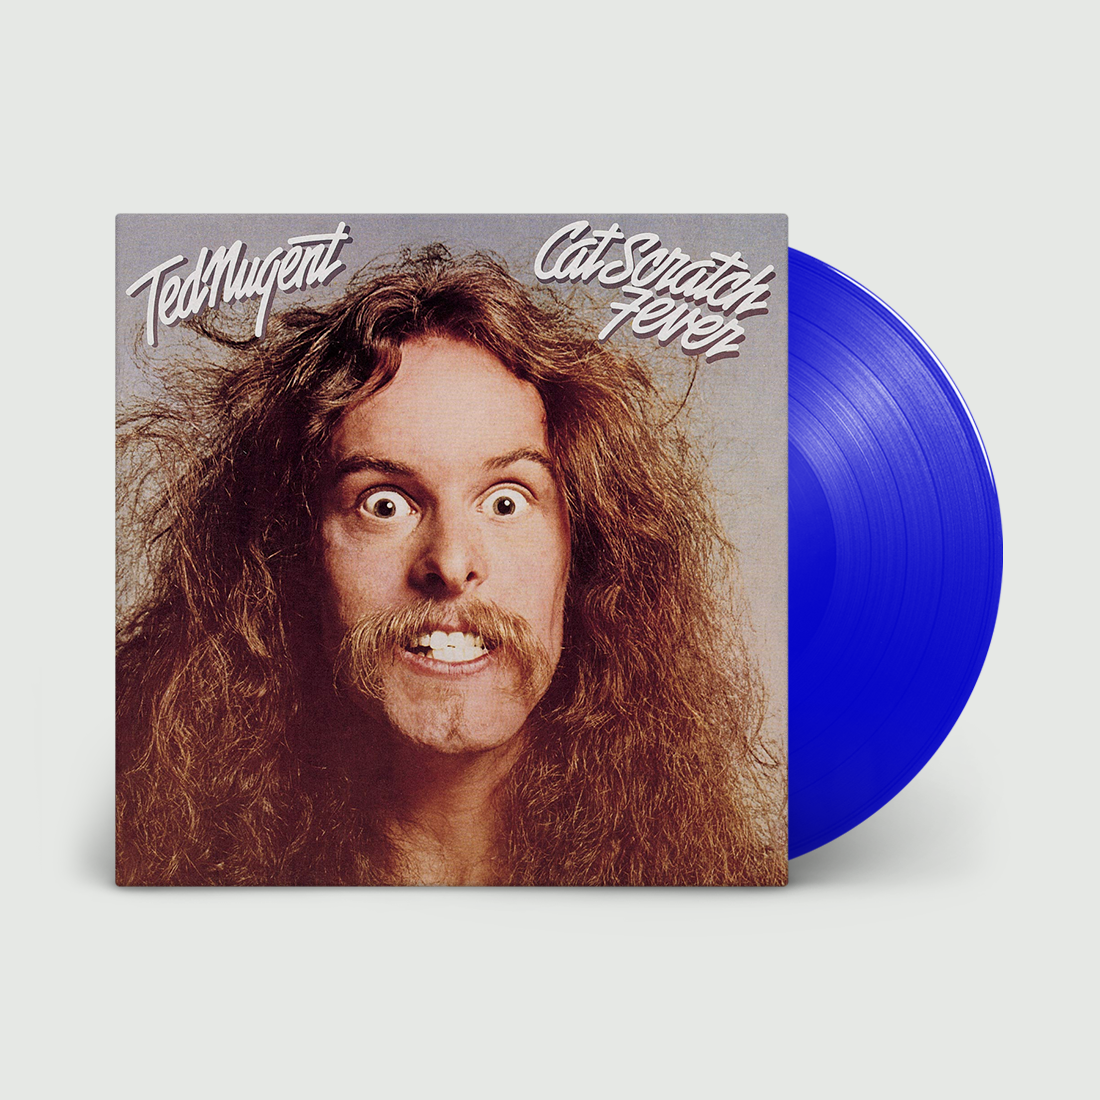 Cat Scratch Fever: Limited Blue Vinyl LP